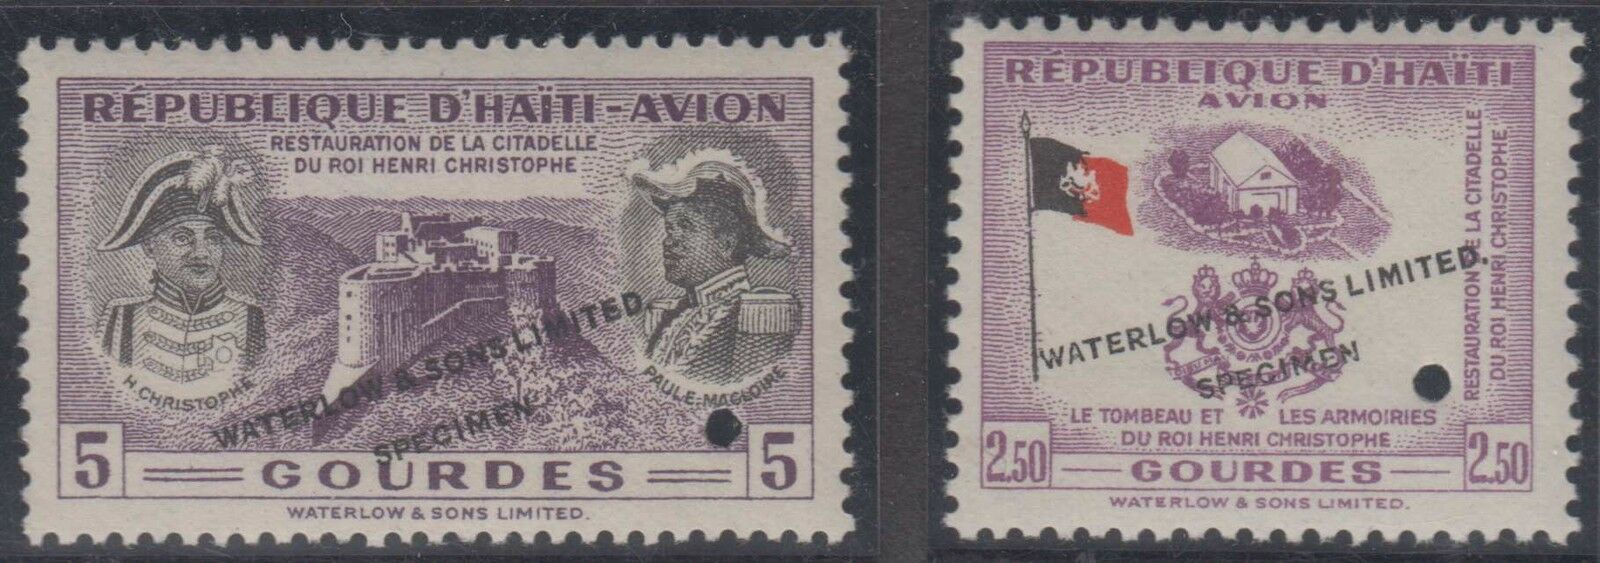 Haiti 1954 Christophe & Flag Sc C85 & C89 Perf Proofs + "specimen" Mnh Vf Scarce